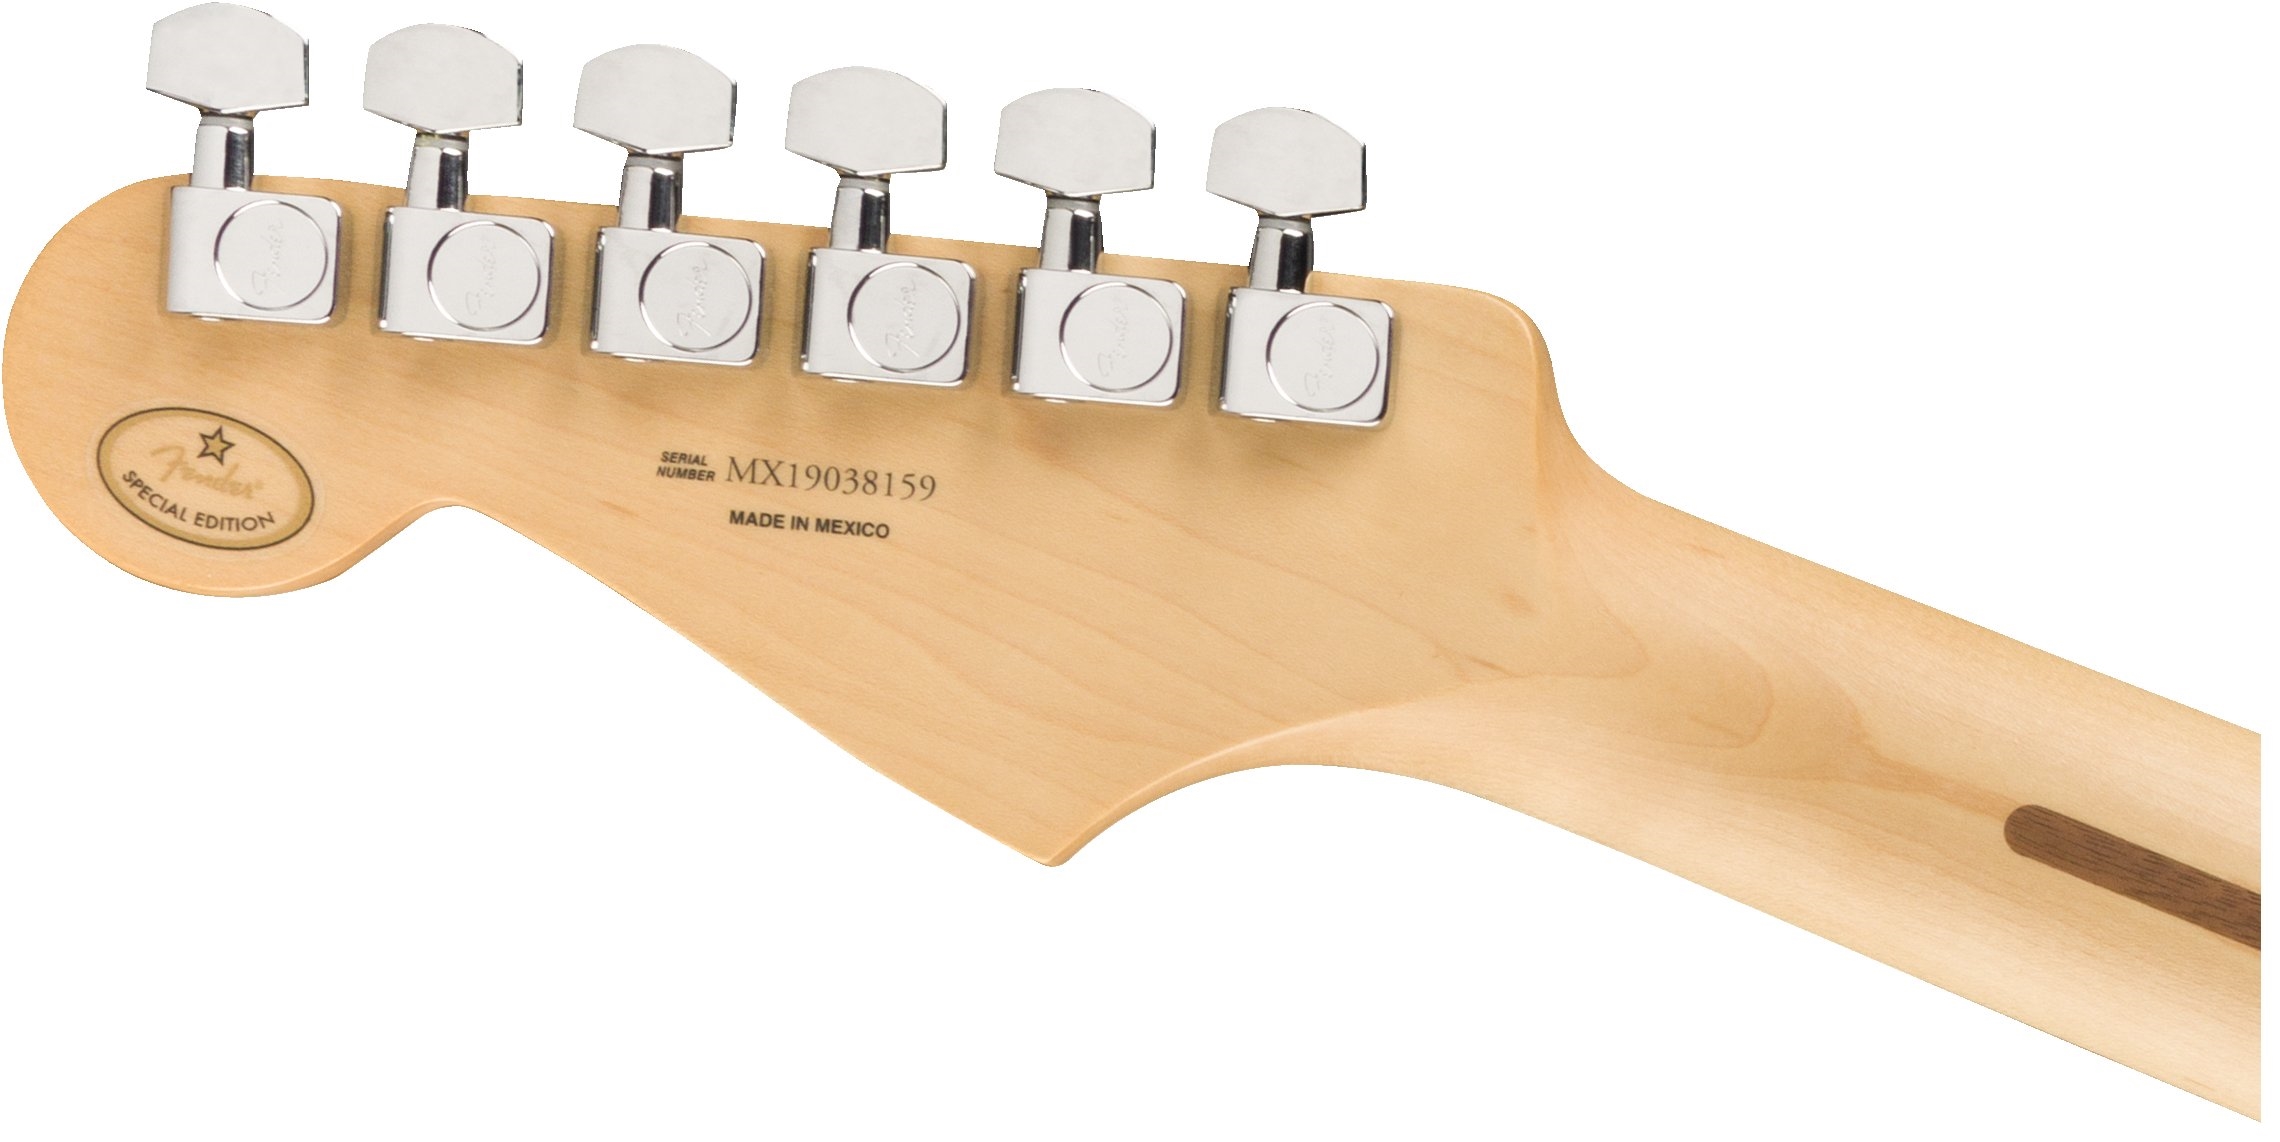 Fender Strat Player Ltd Mex 3s Trem Pf - Fiesta Red - Str shape electric guitar - Variation 5